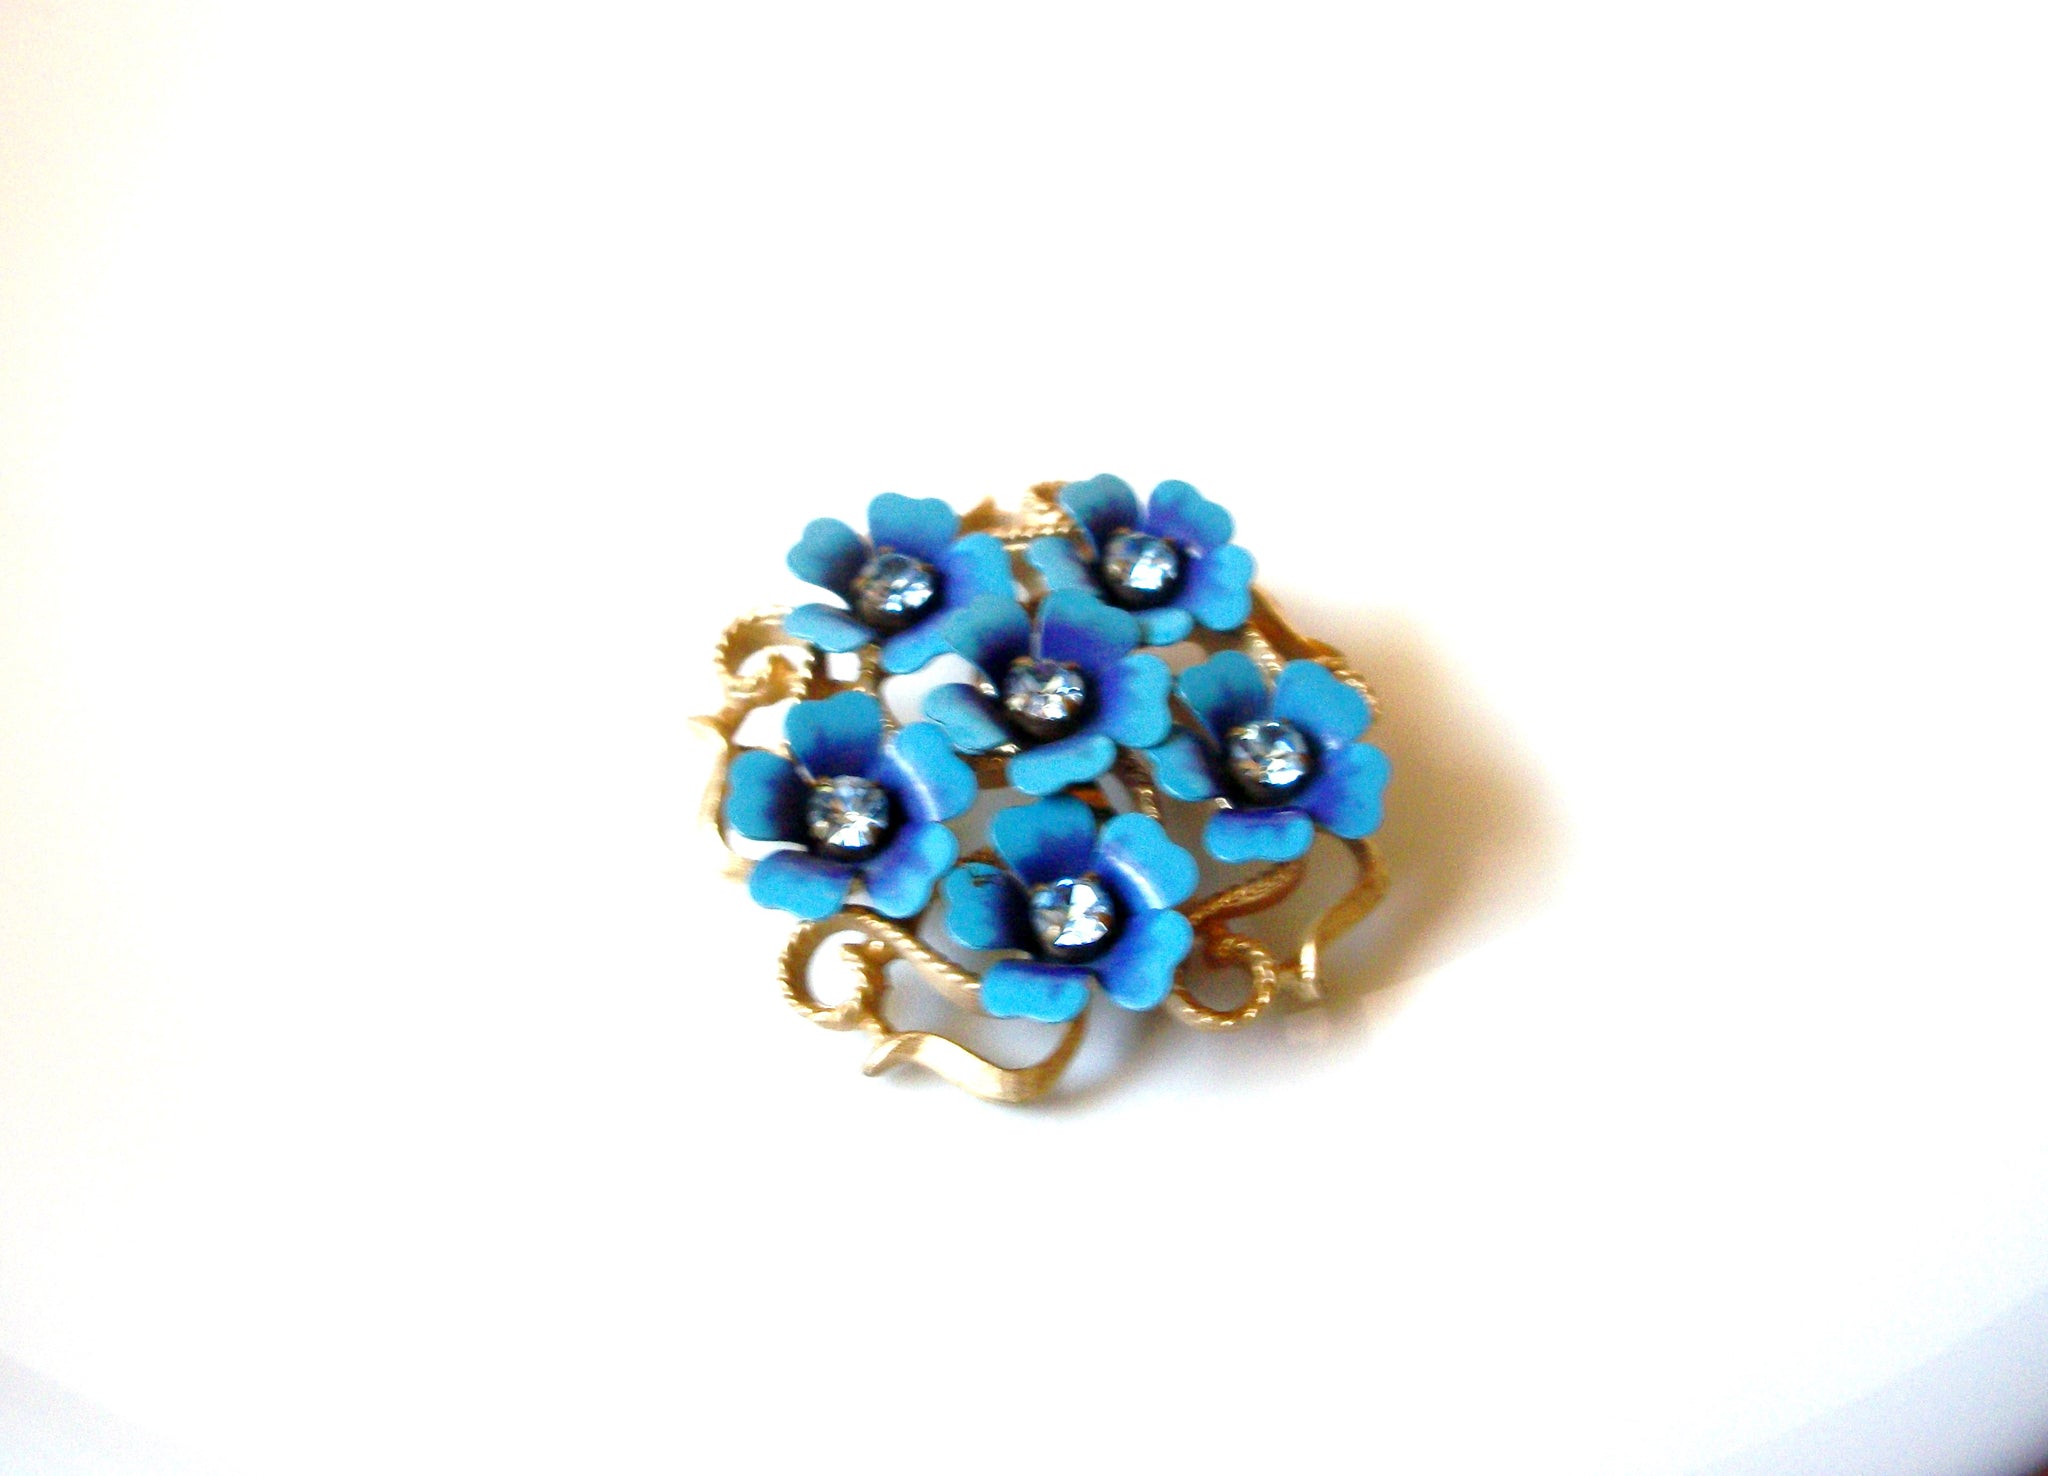 Vintage AVON Blue Flower Clear Rhinestone Flower Brooch Pin Enhancer 122120